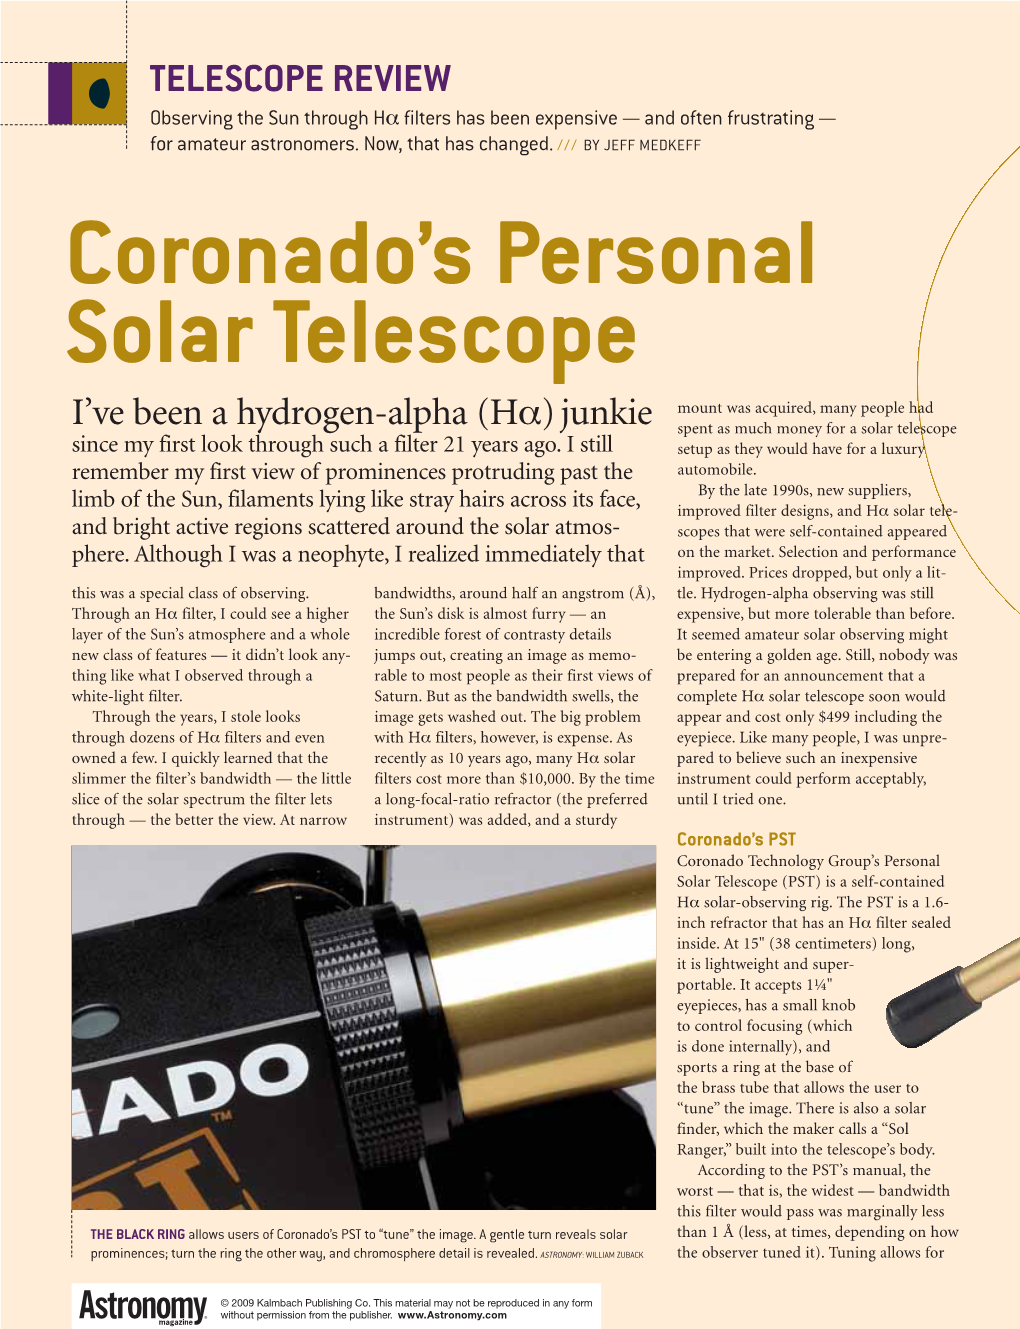 Coronado's Personal Solar Telescope